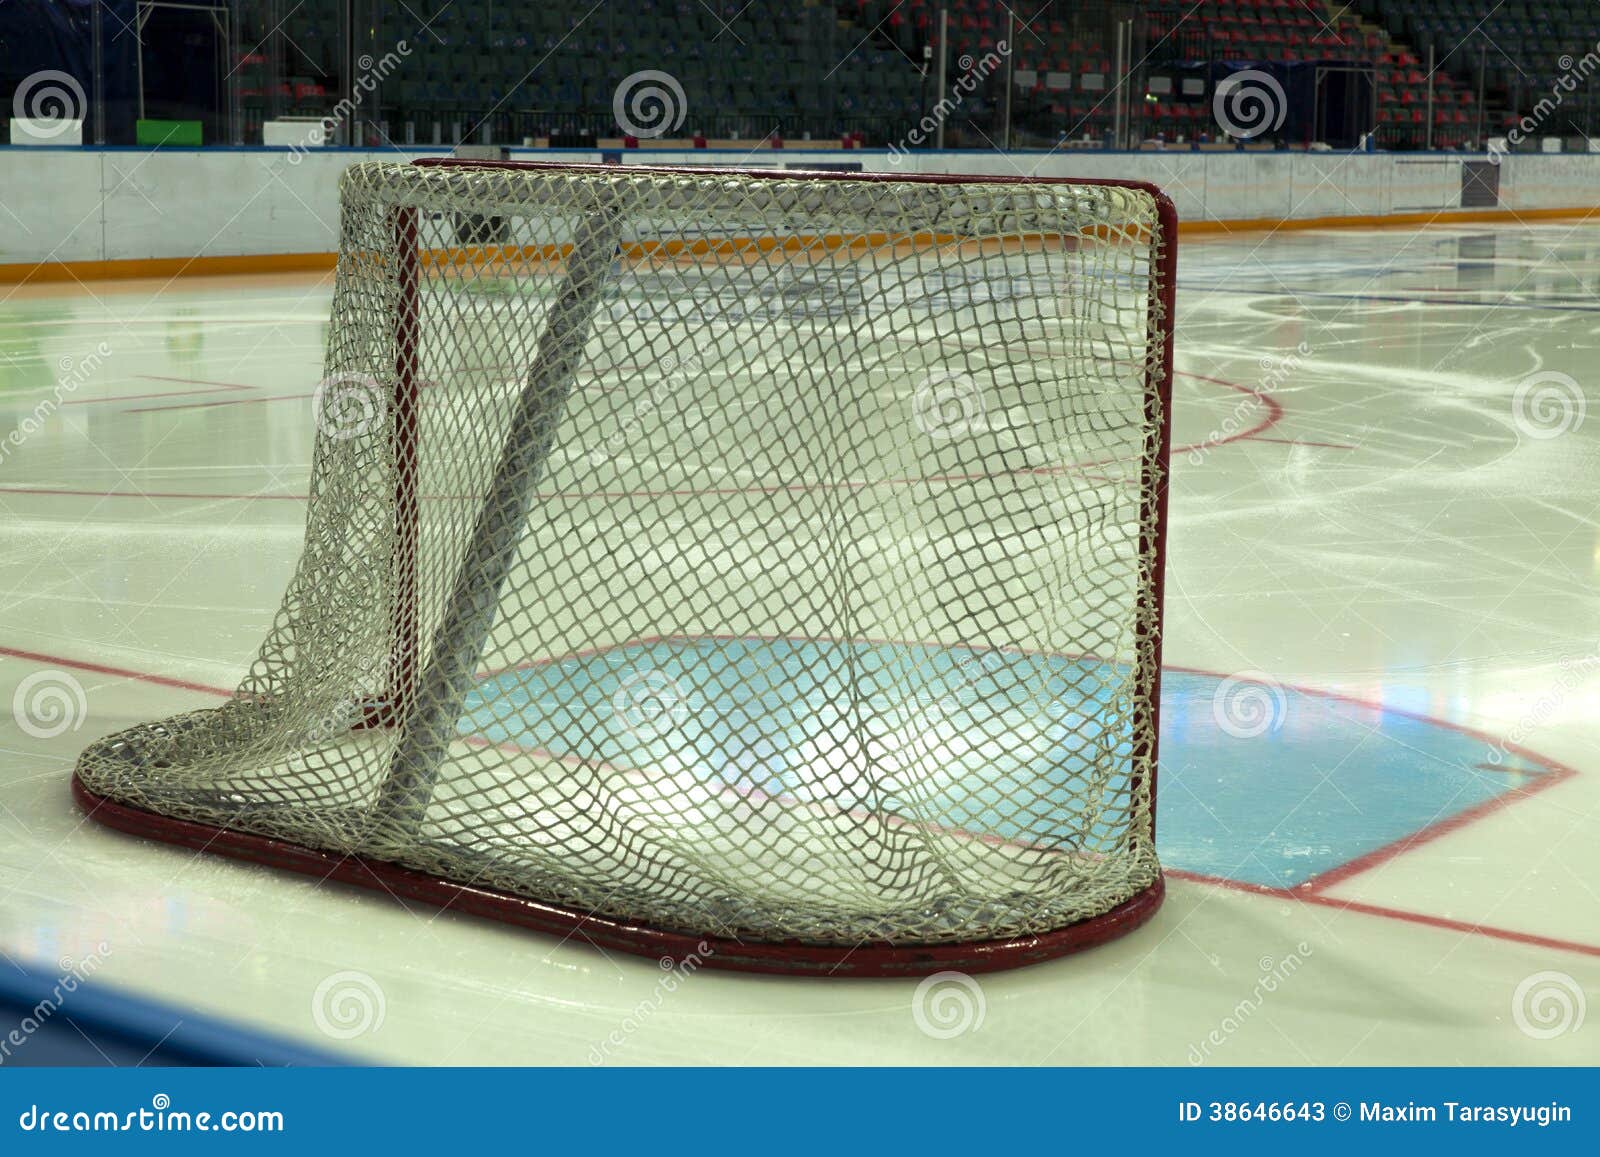 TV Broadcast Hockey, Hockey Goals Stock Image